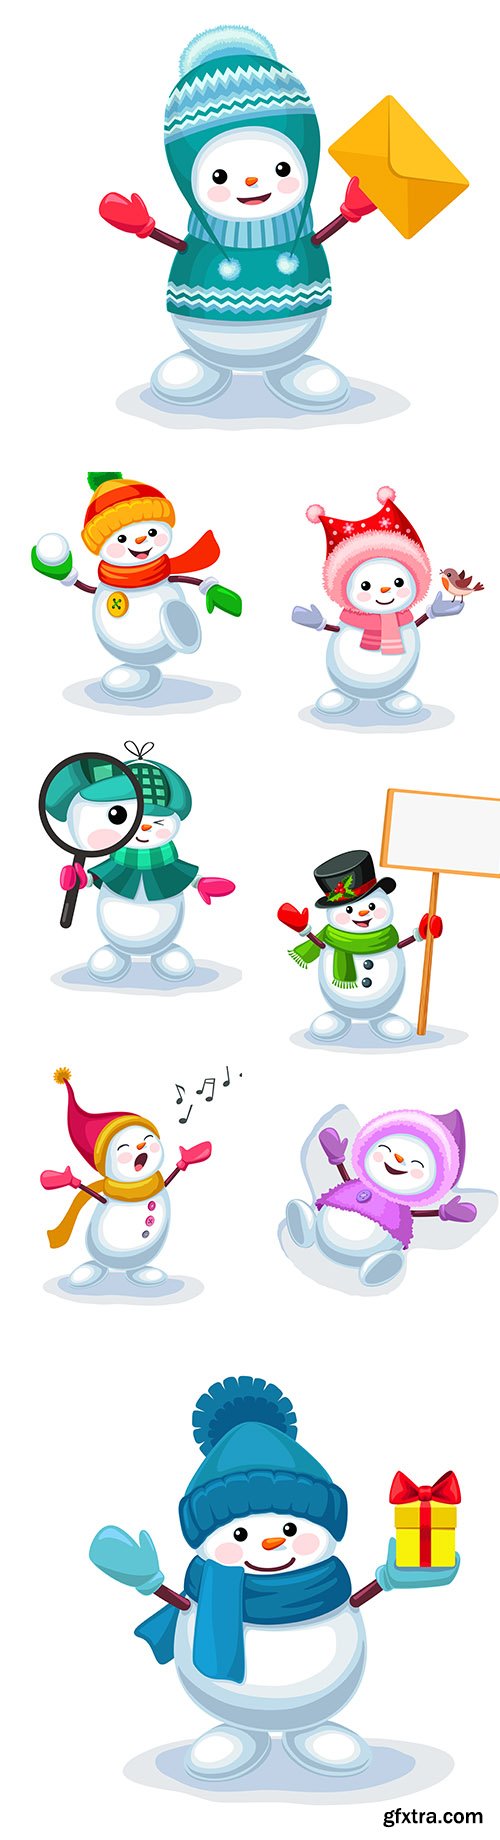 Cute snowman playing snowballs